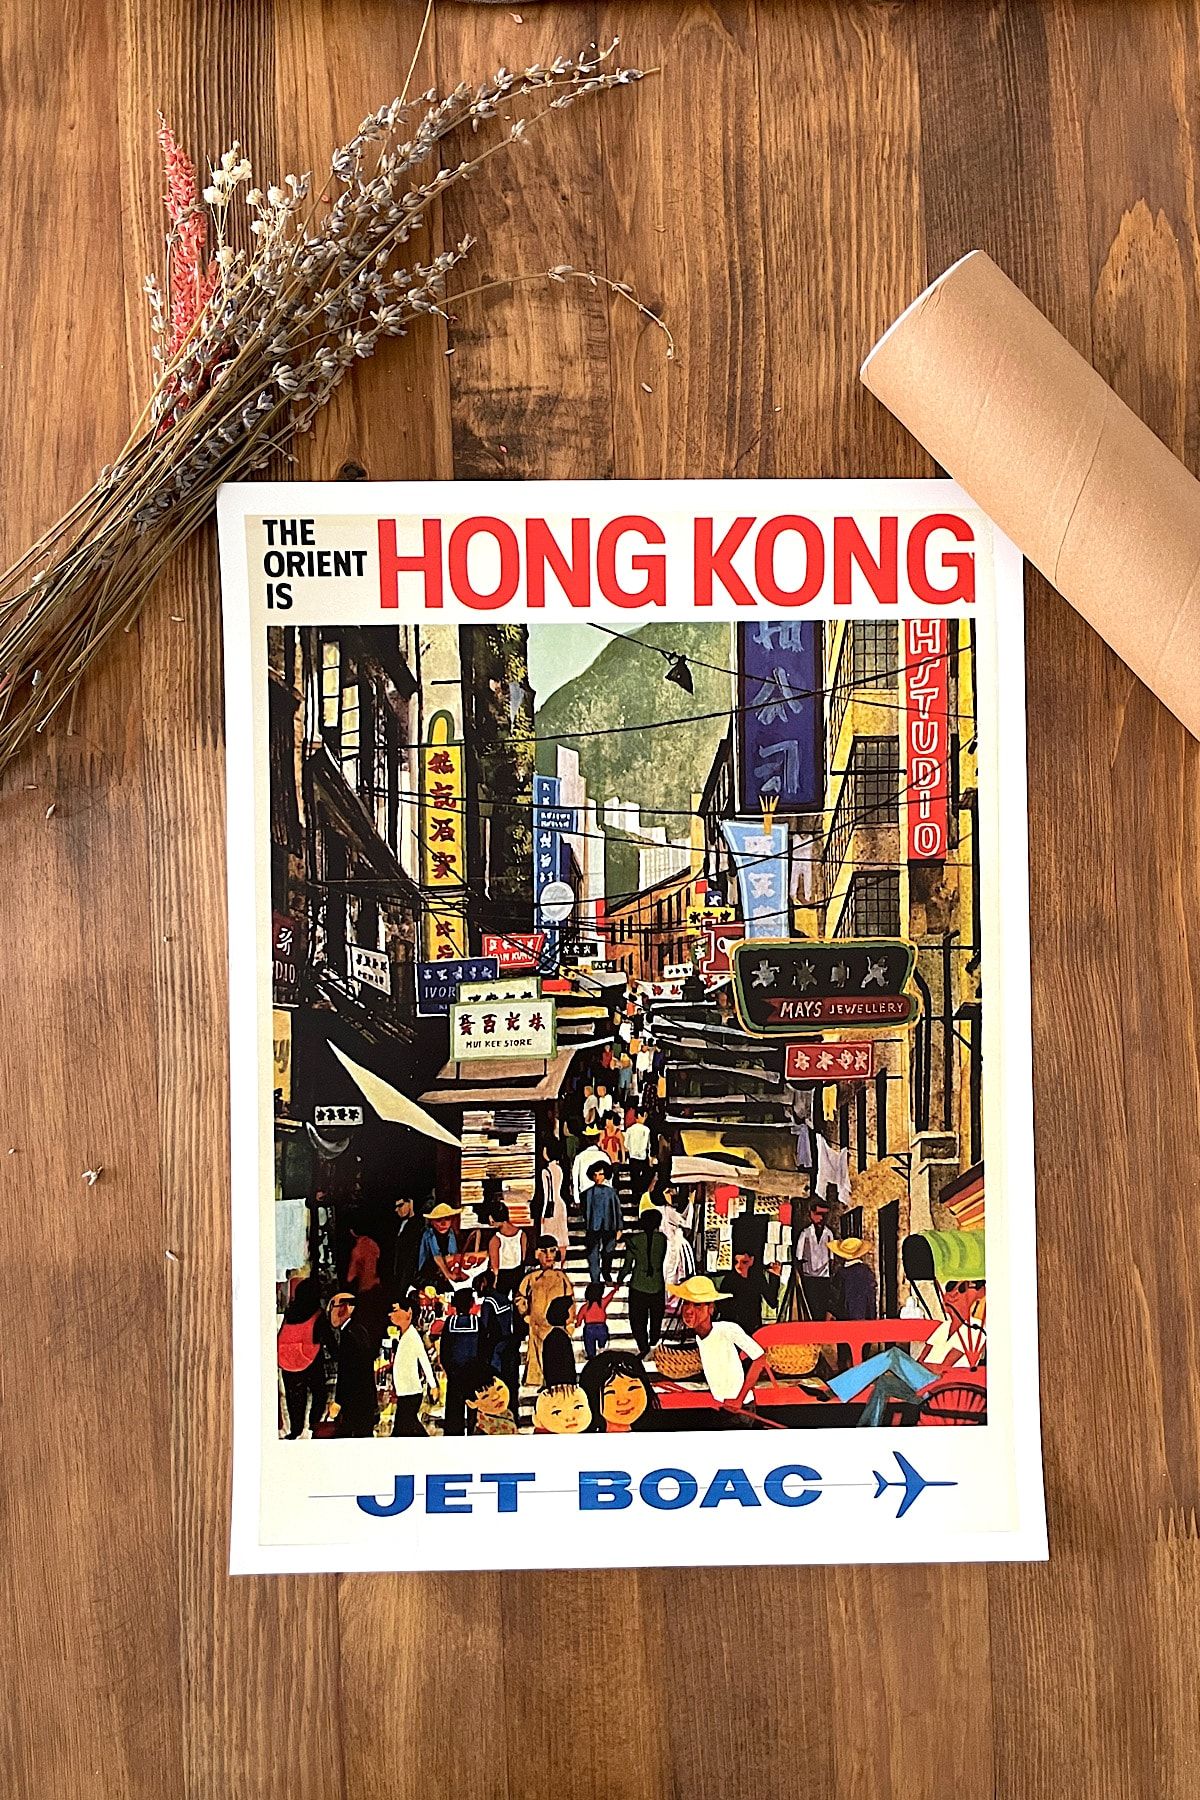 capo by aytaç yamaç Çerçevesiz Hong Kong  Vintage Reprodüksiyon 30x40cm Poster